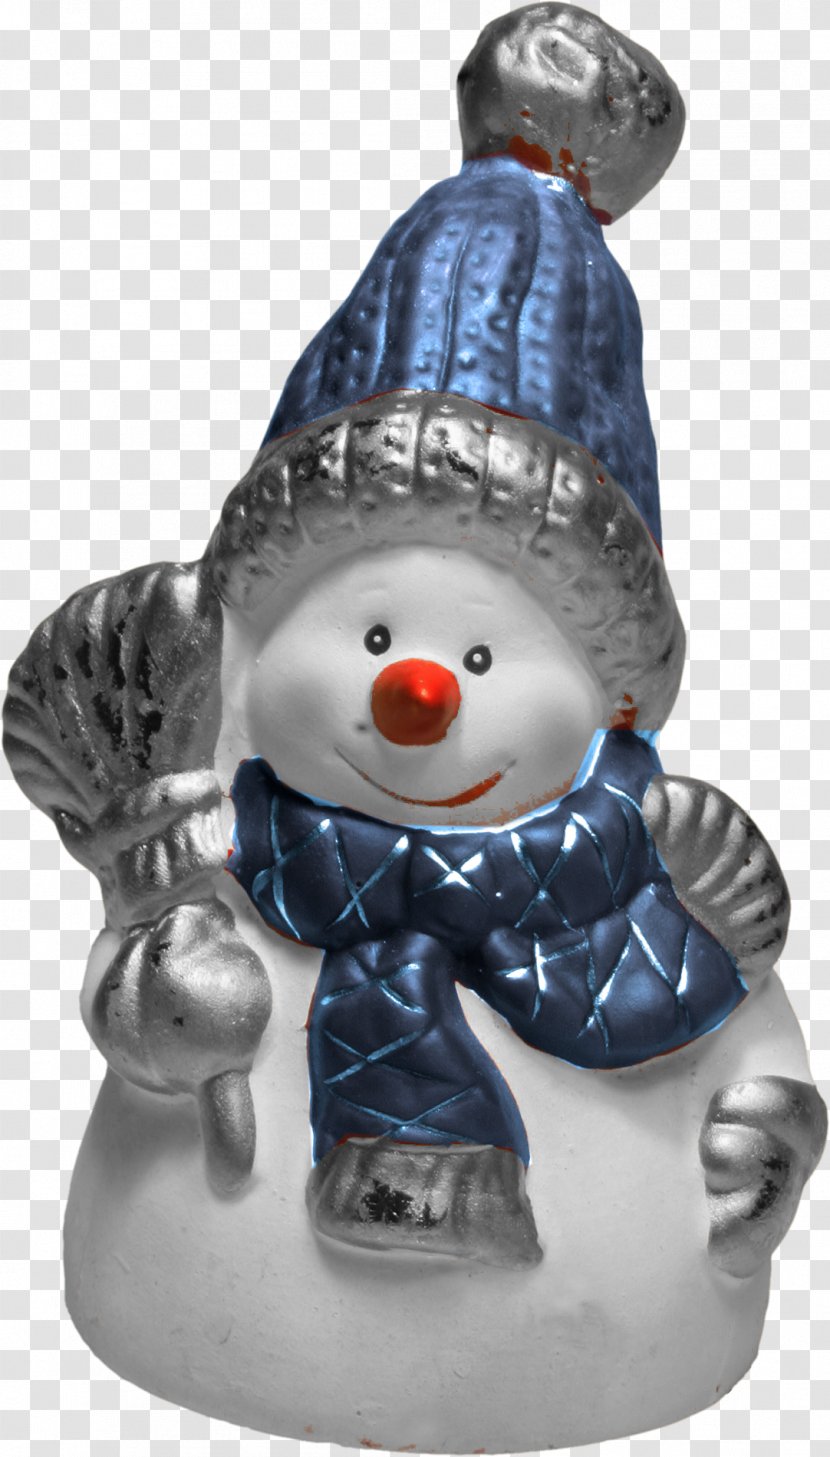 Snowman - Figurine - Pretty Creative Transparent PNG